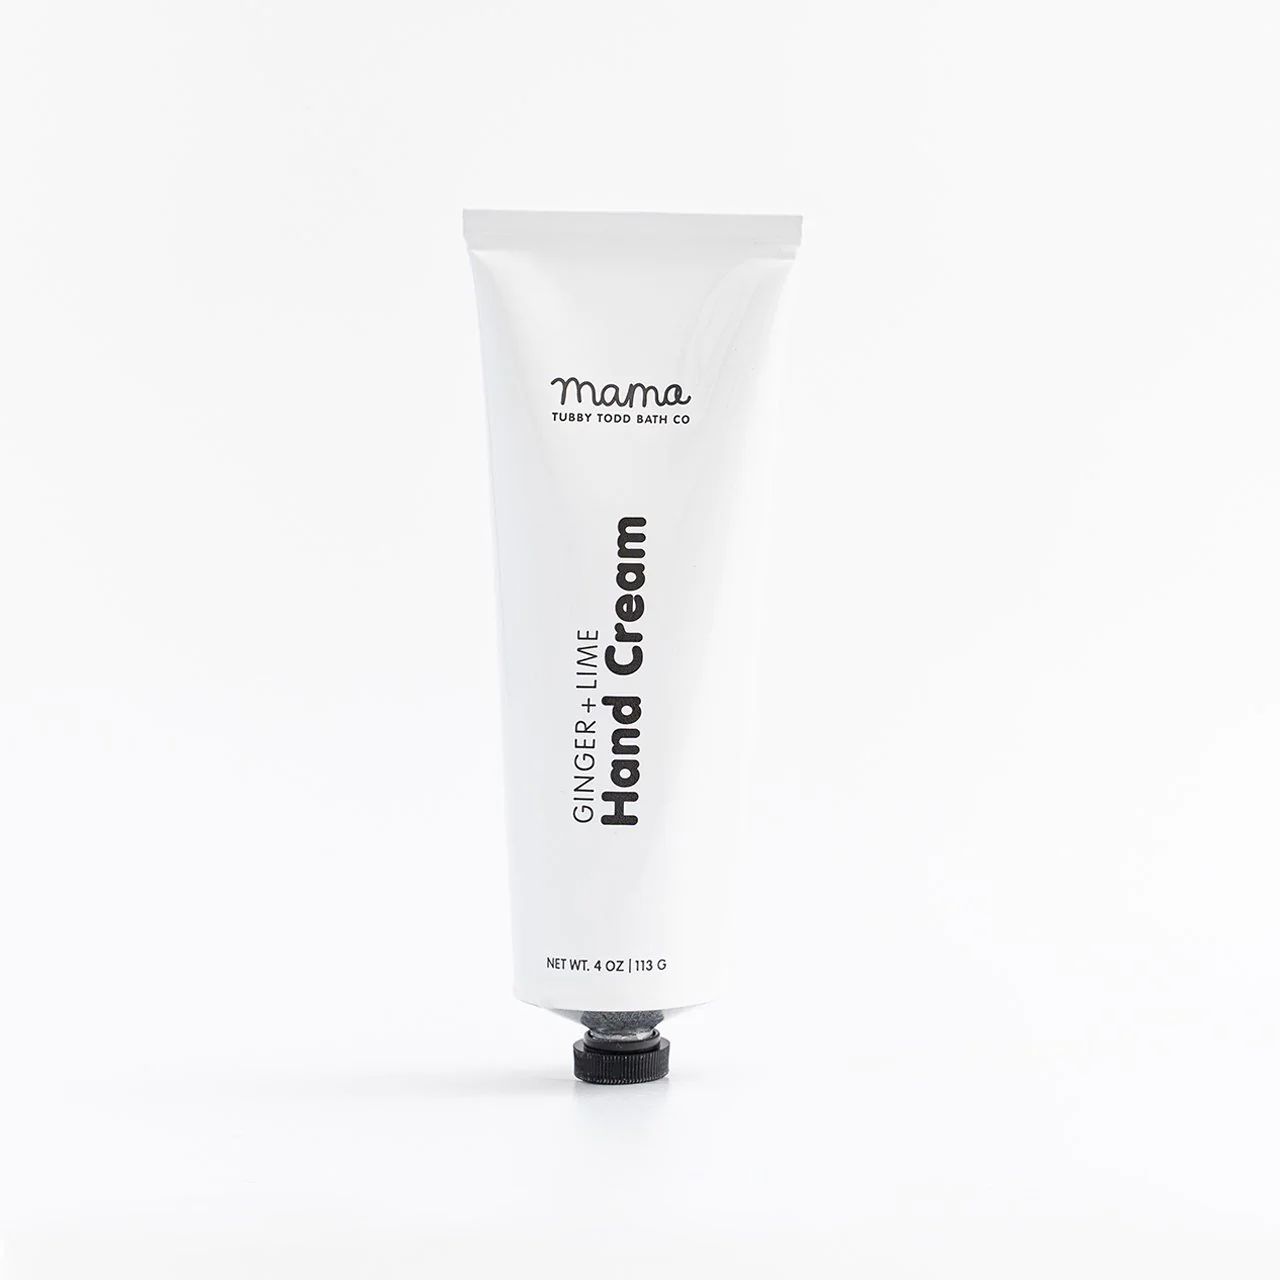 Hand Cream | Tubby Todd Bath Co